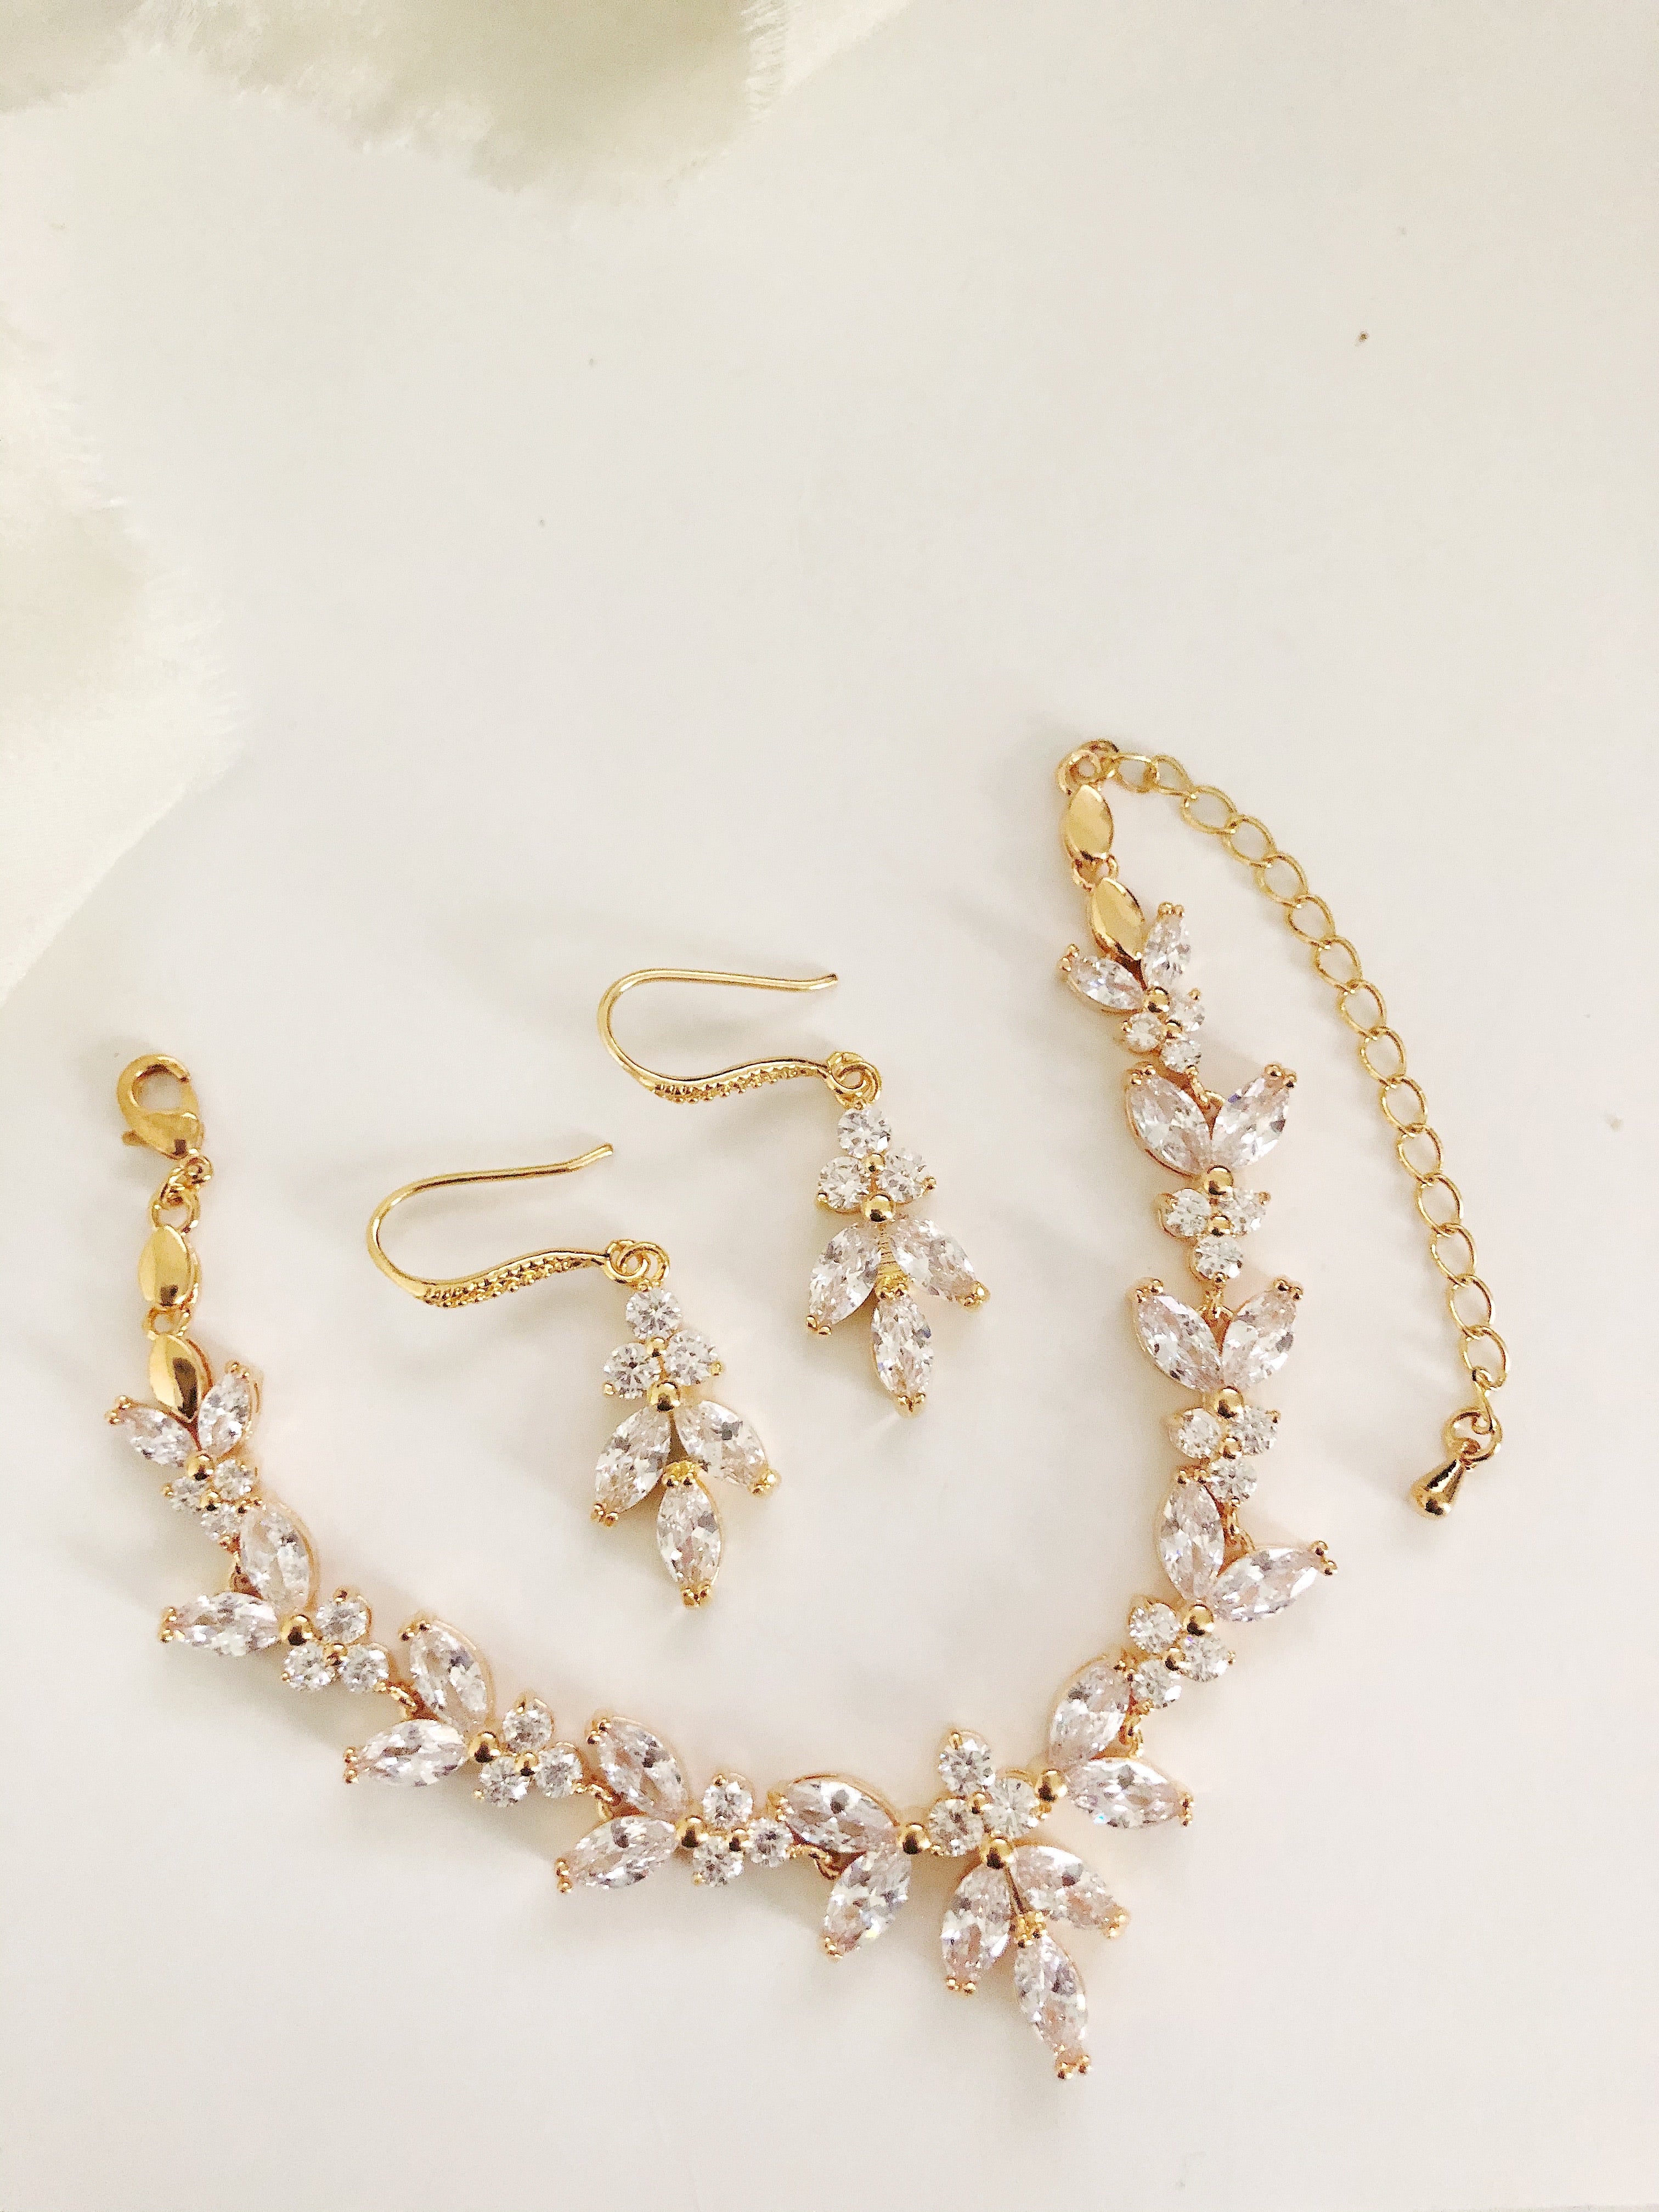 Ellen Gold Diamond Earrings and Bracelet Set